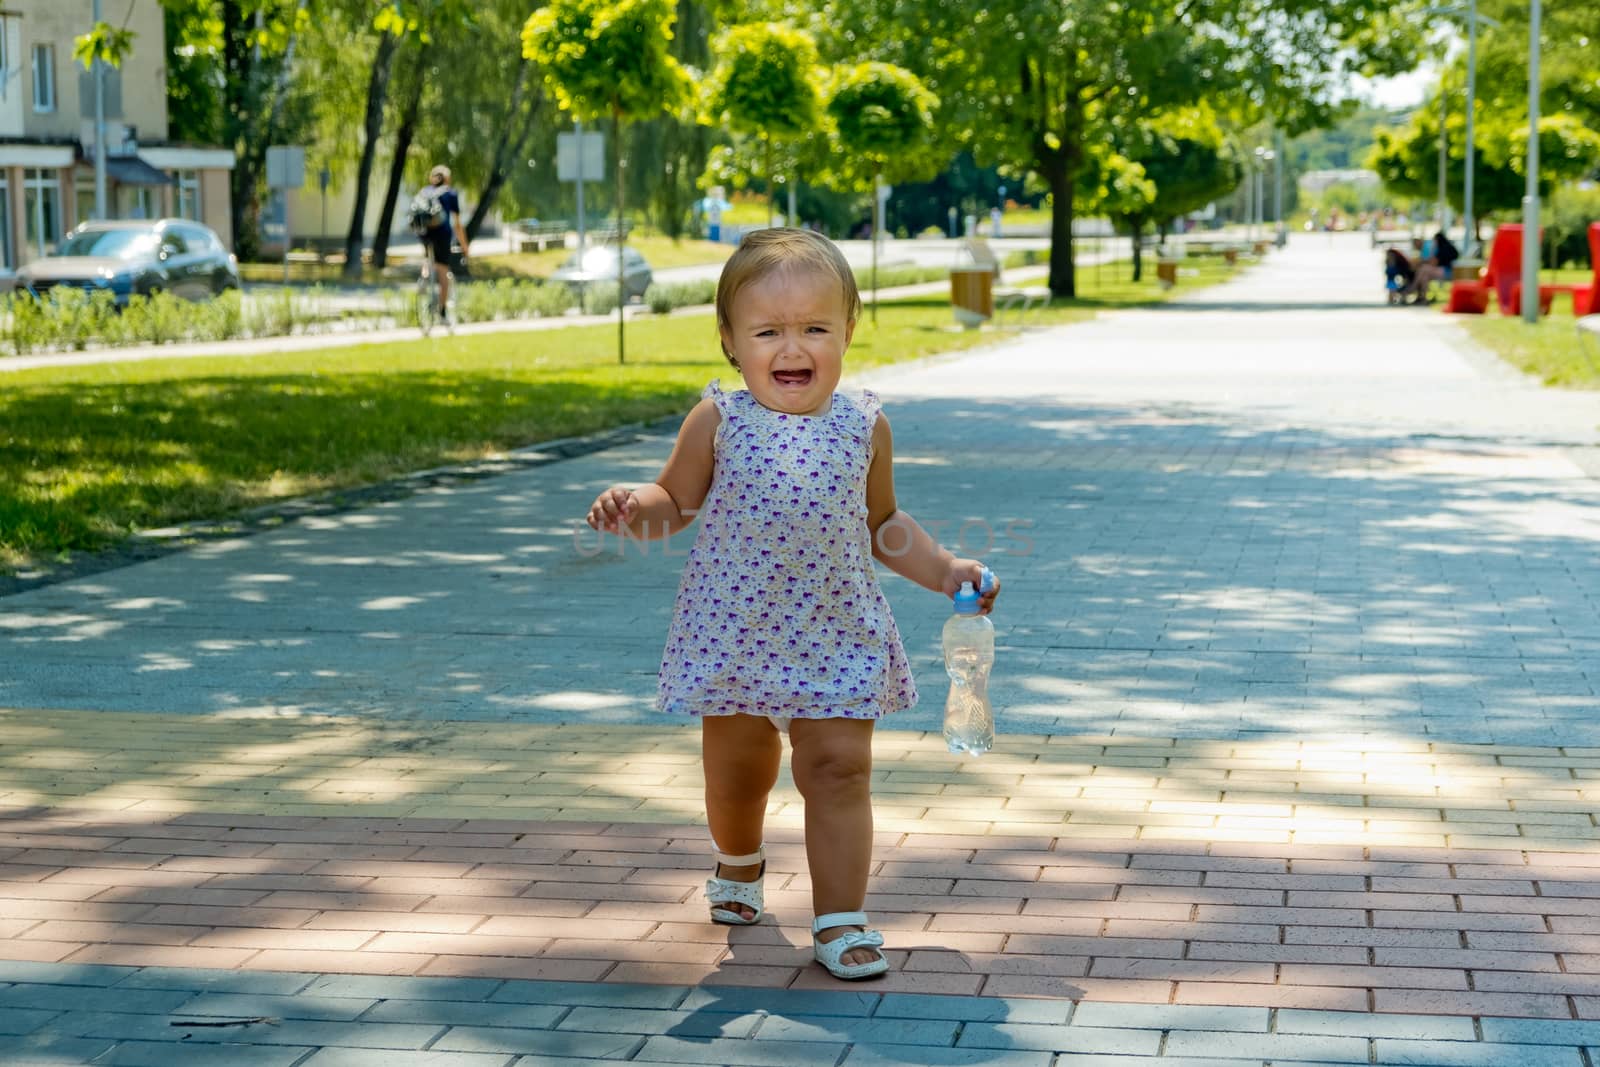 A little girl walks along the sidewalk and cries.